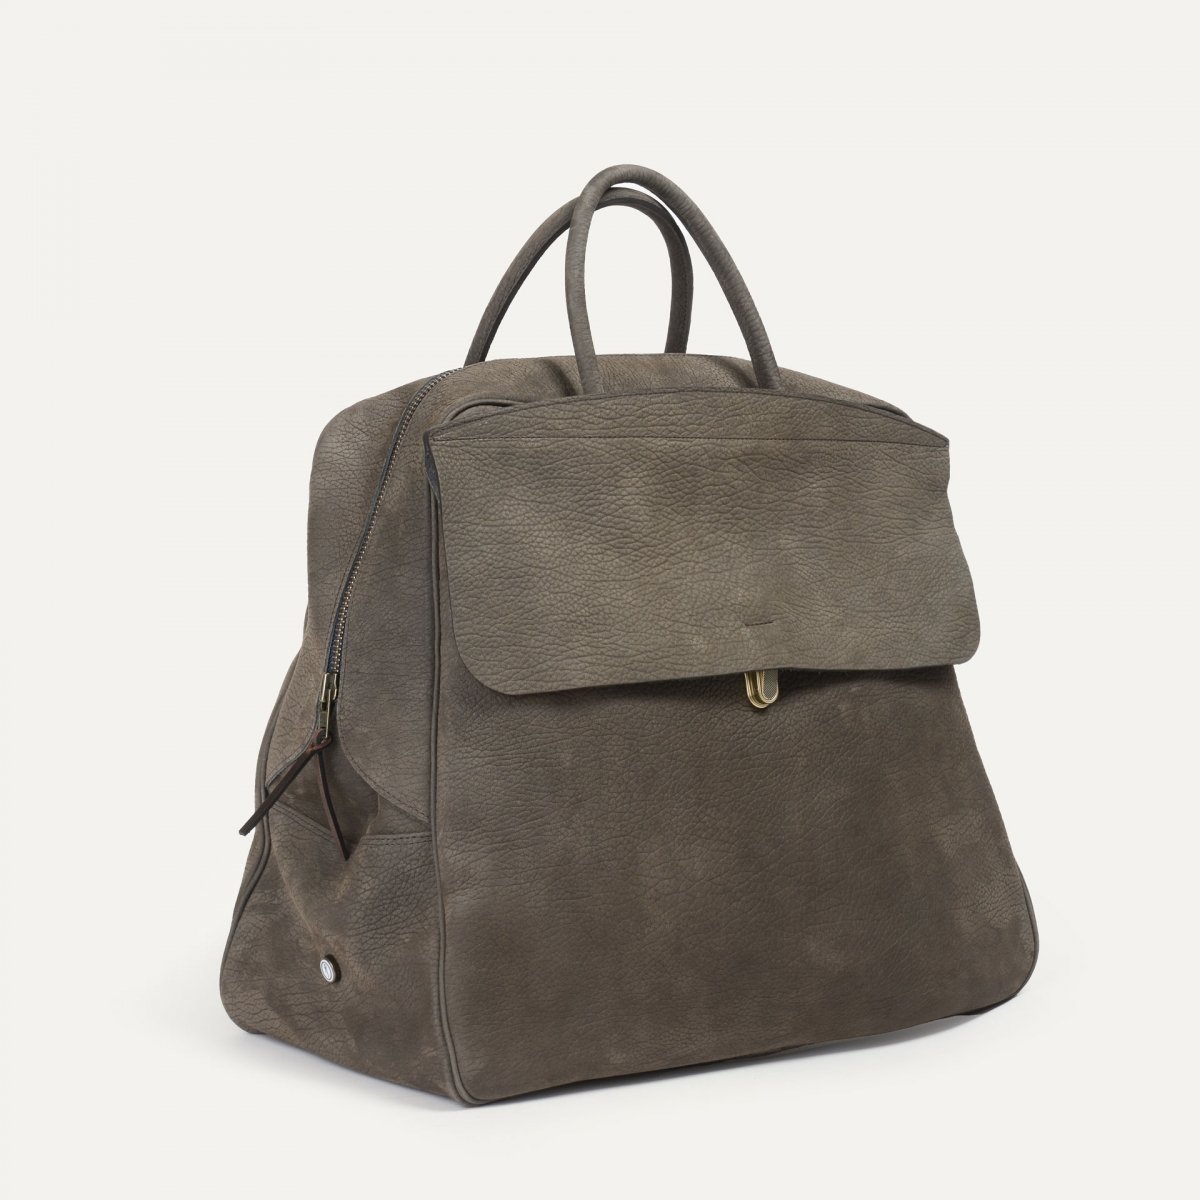 Zoom Travel bag - Soft Khaki brown (image n°1)